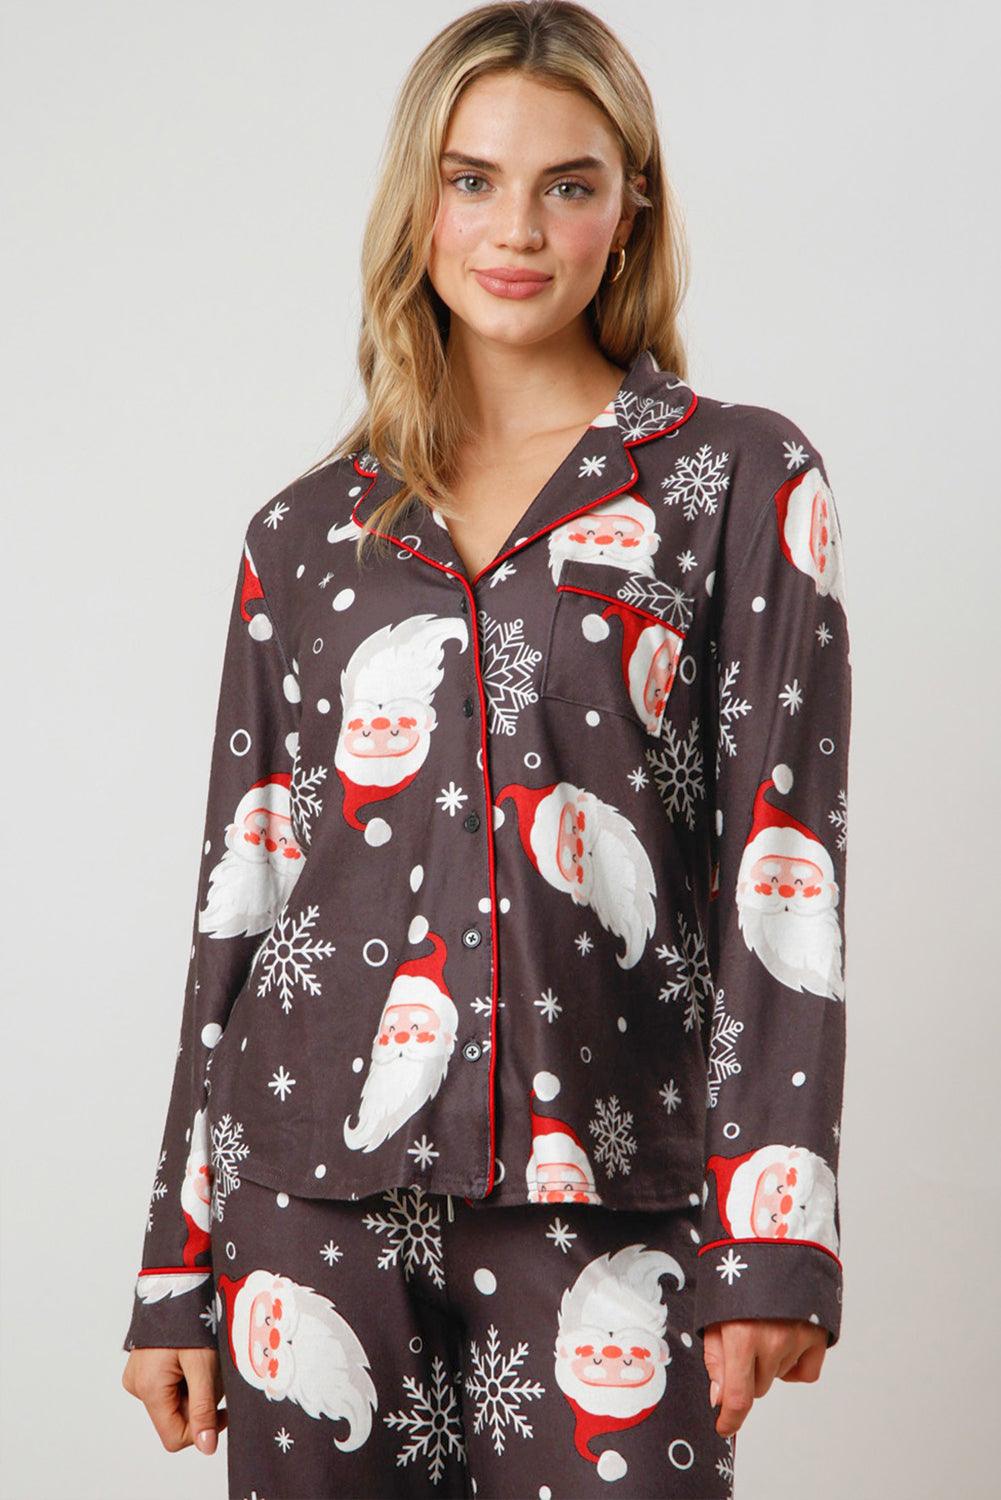 White Printed Christmas Santa Claus Print Shirt and Pants Pajama Set - L & M Kee, LLC